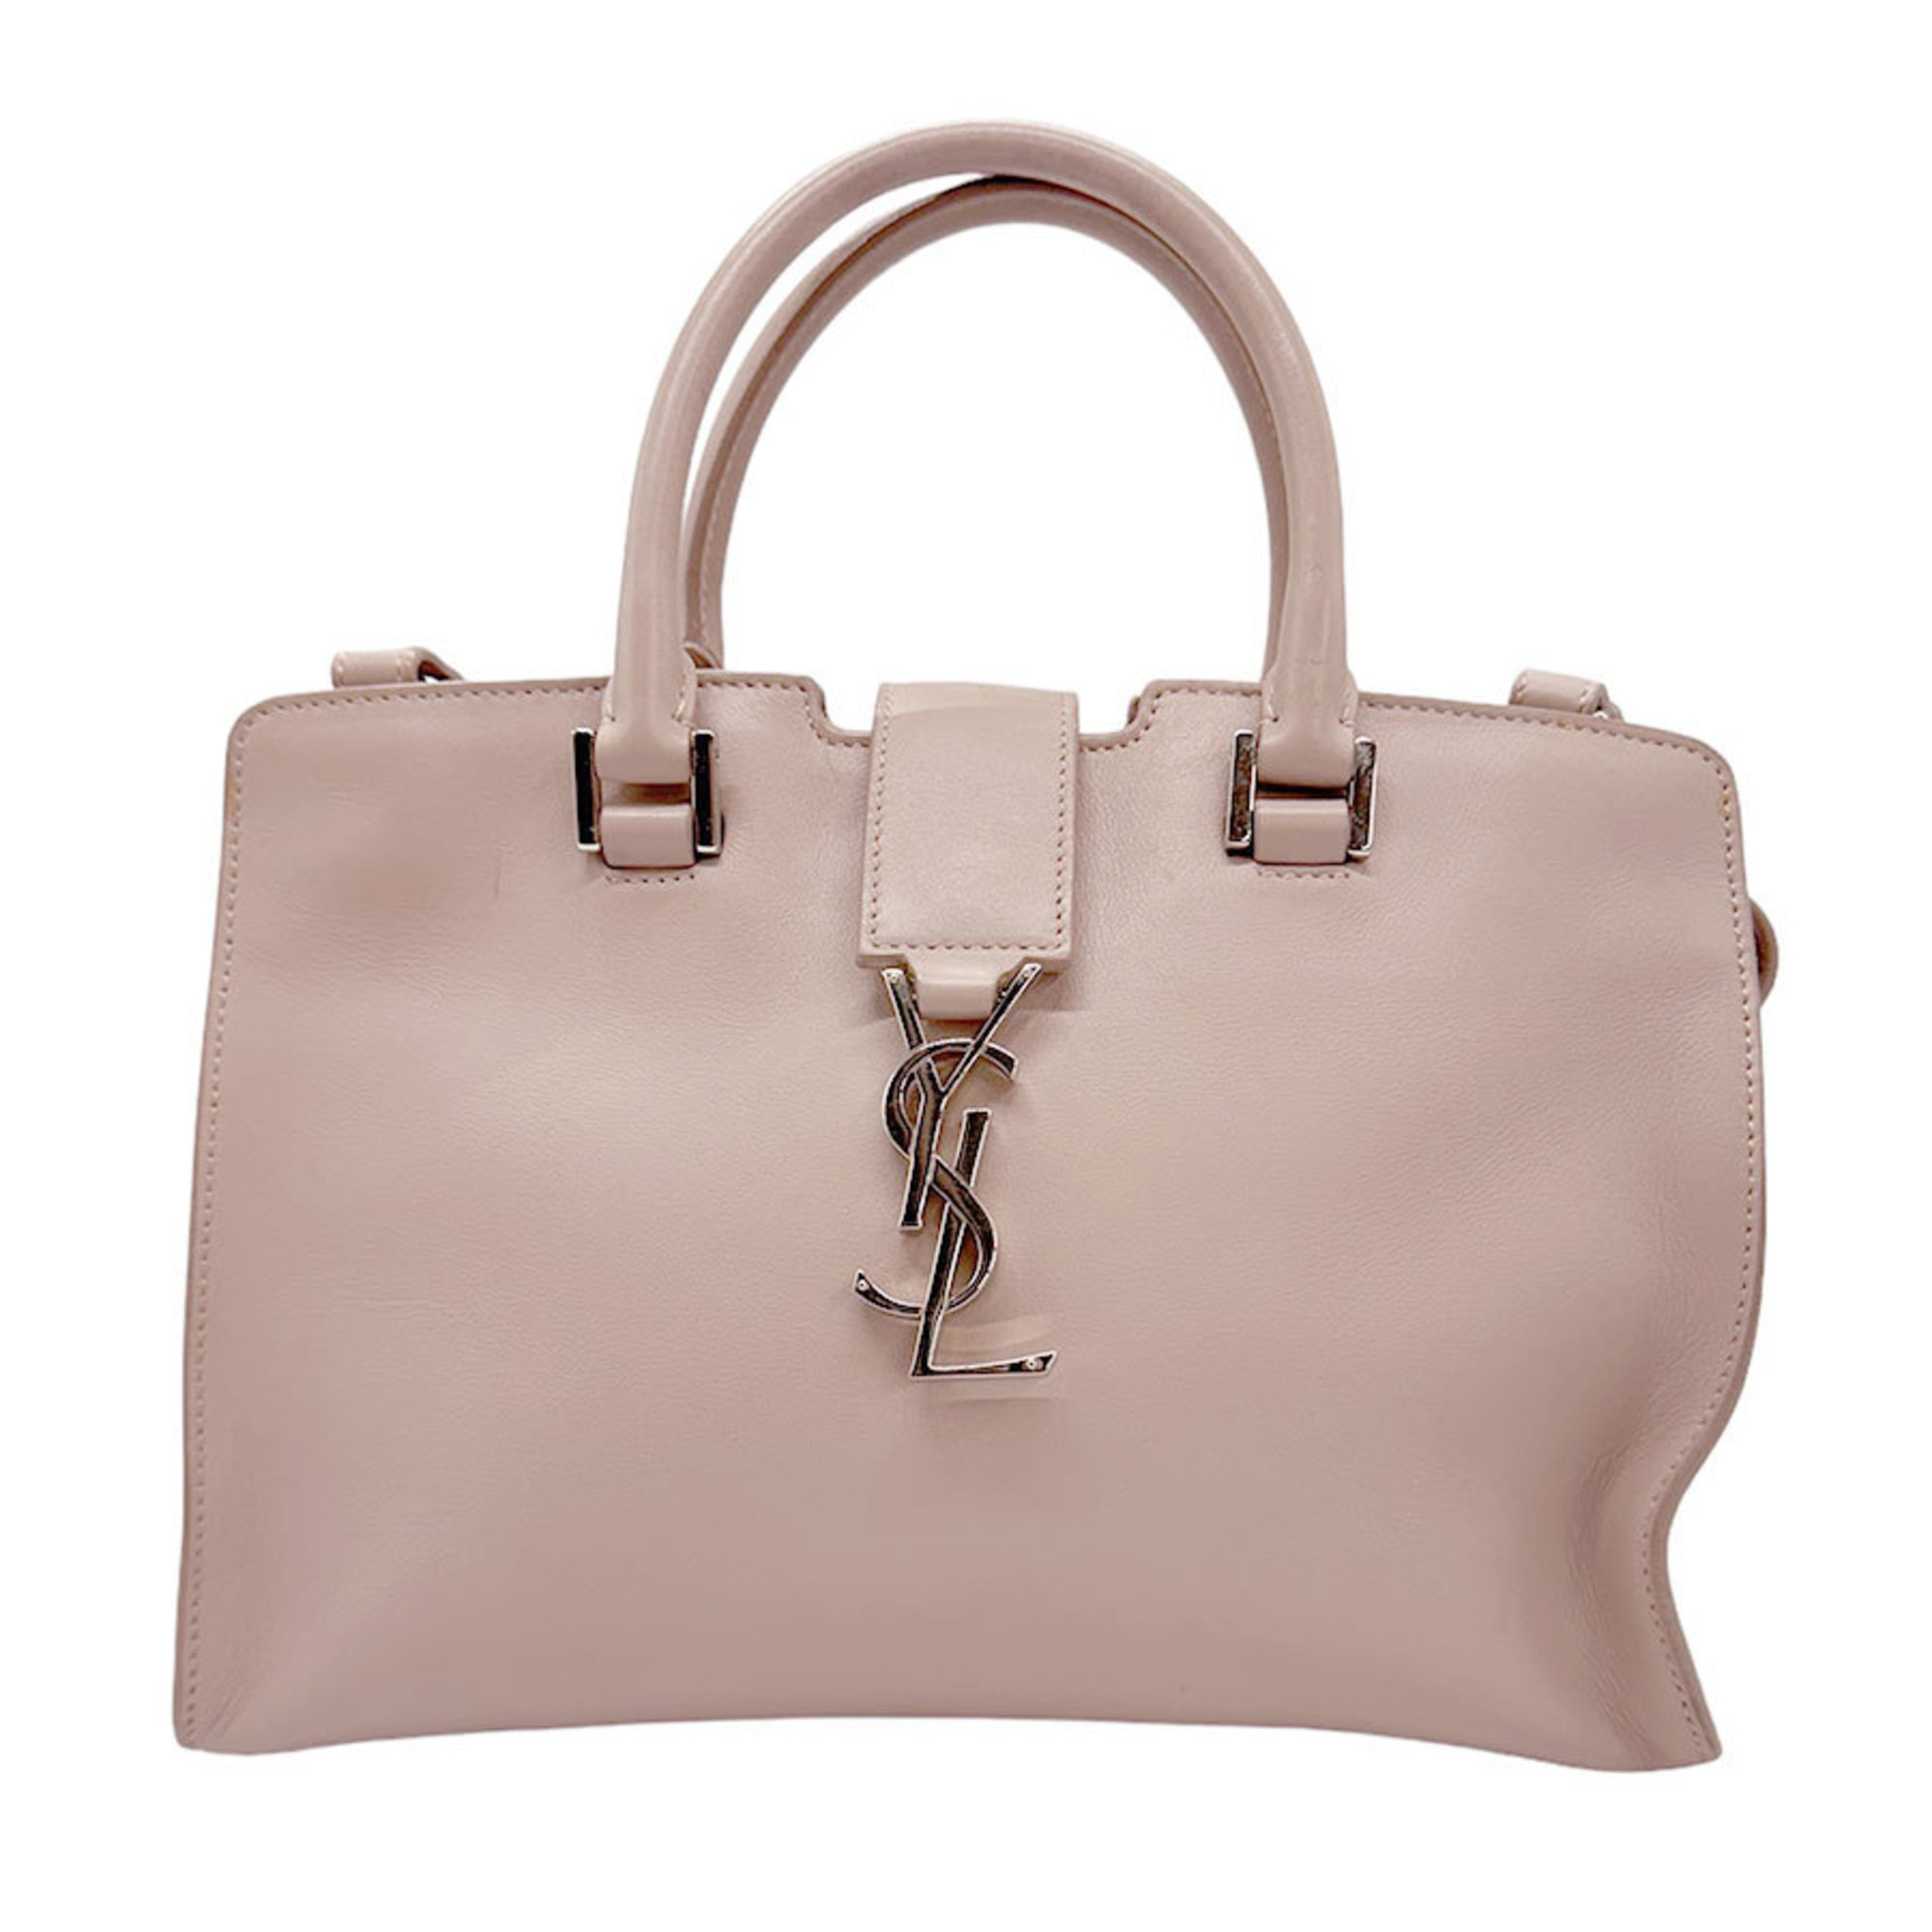 Saint Laurent SAINT LAURENT Handbag Shoulder Bag Baby Cabas Leather Light Pink Women's 424868 z0780